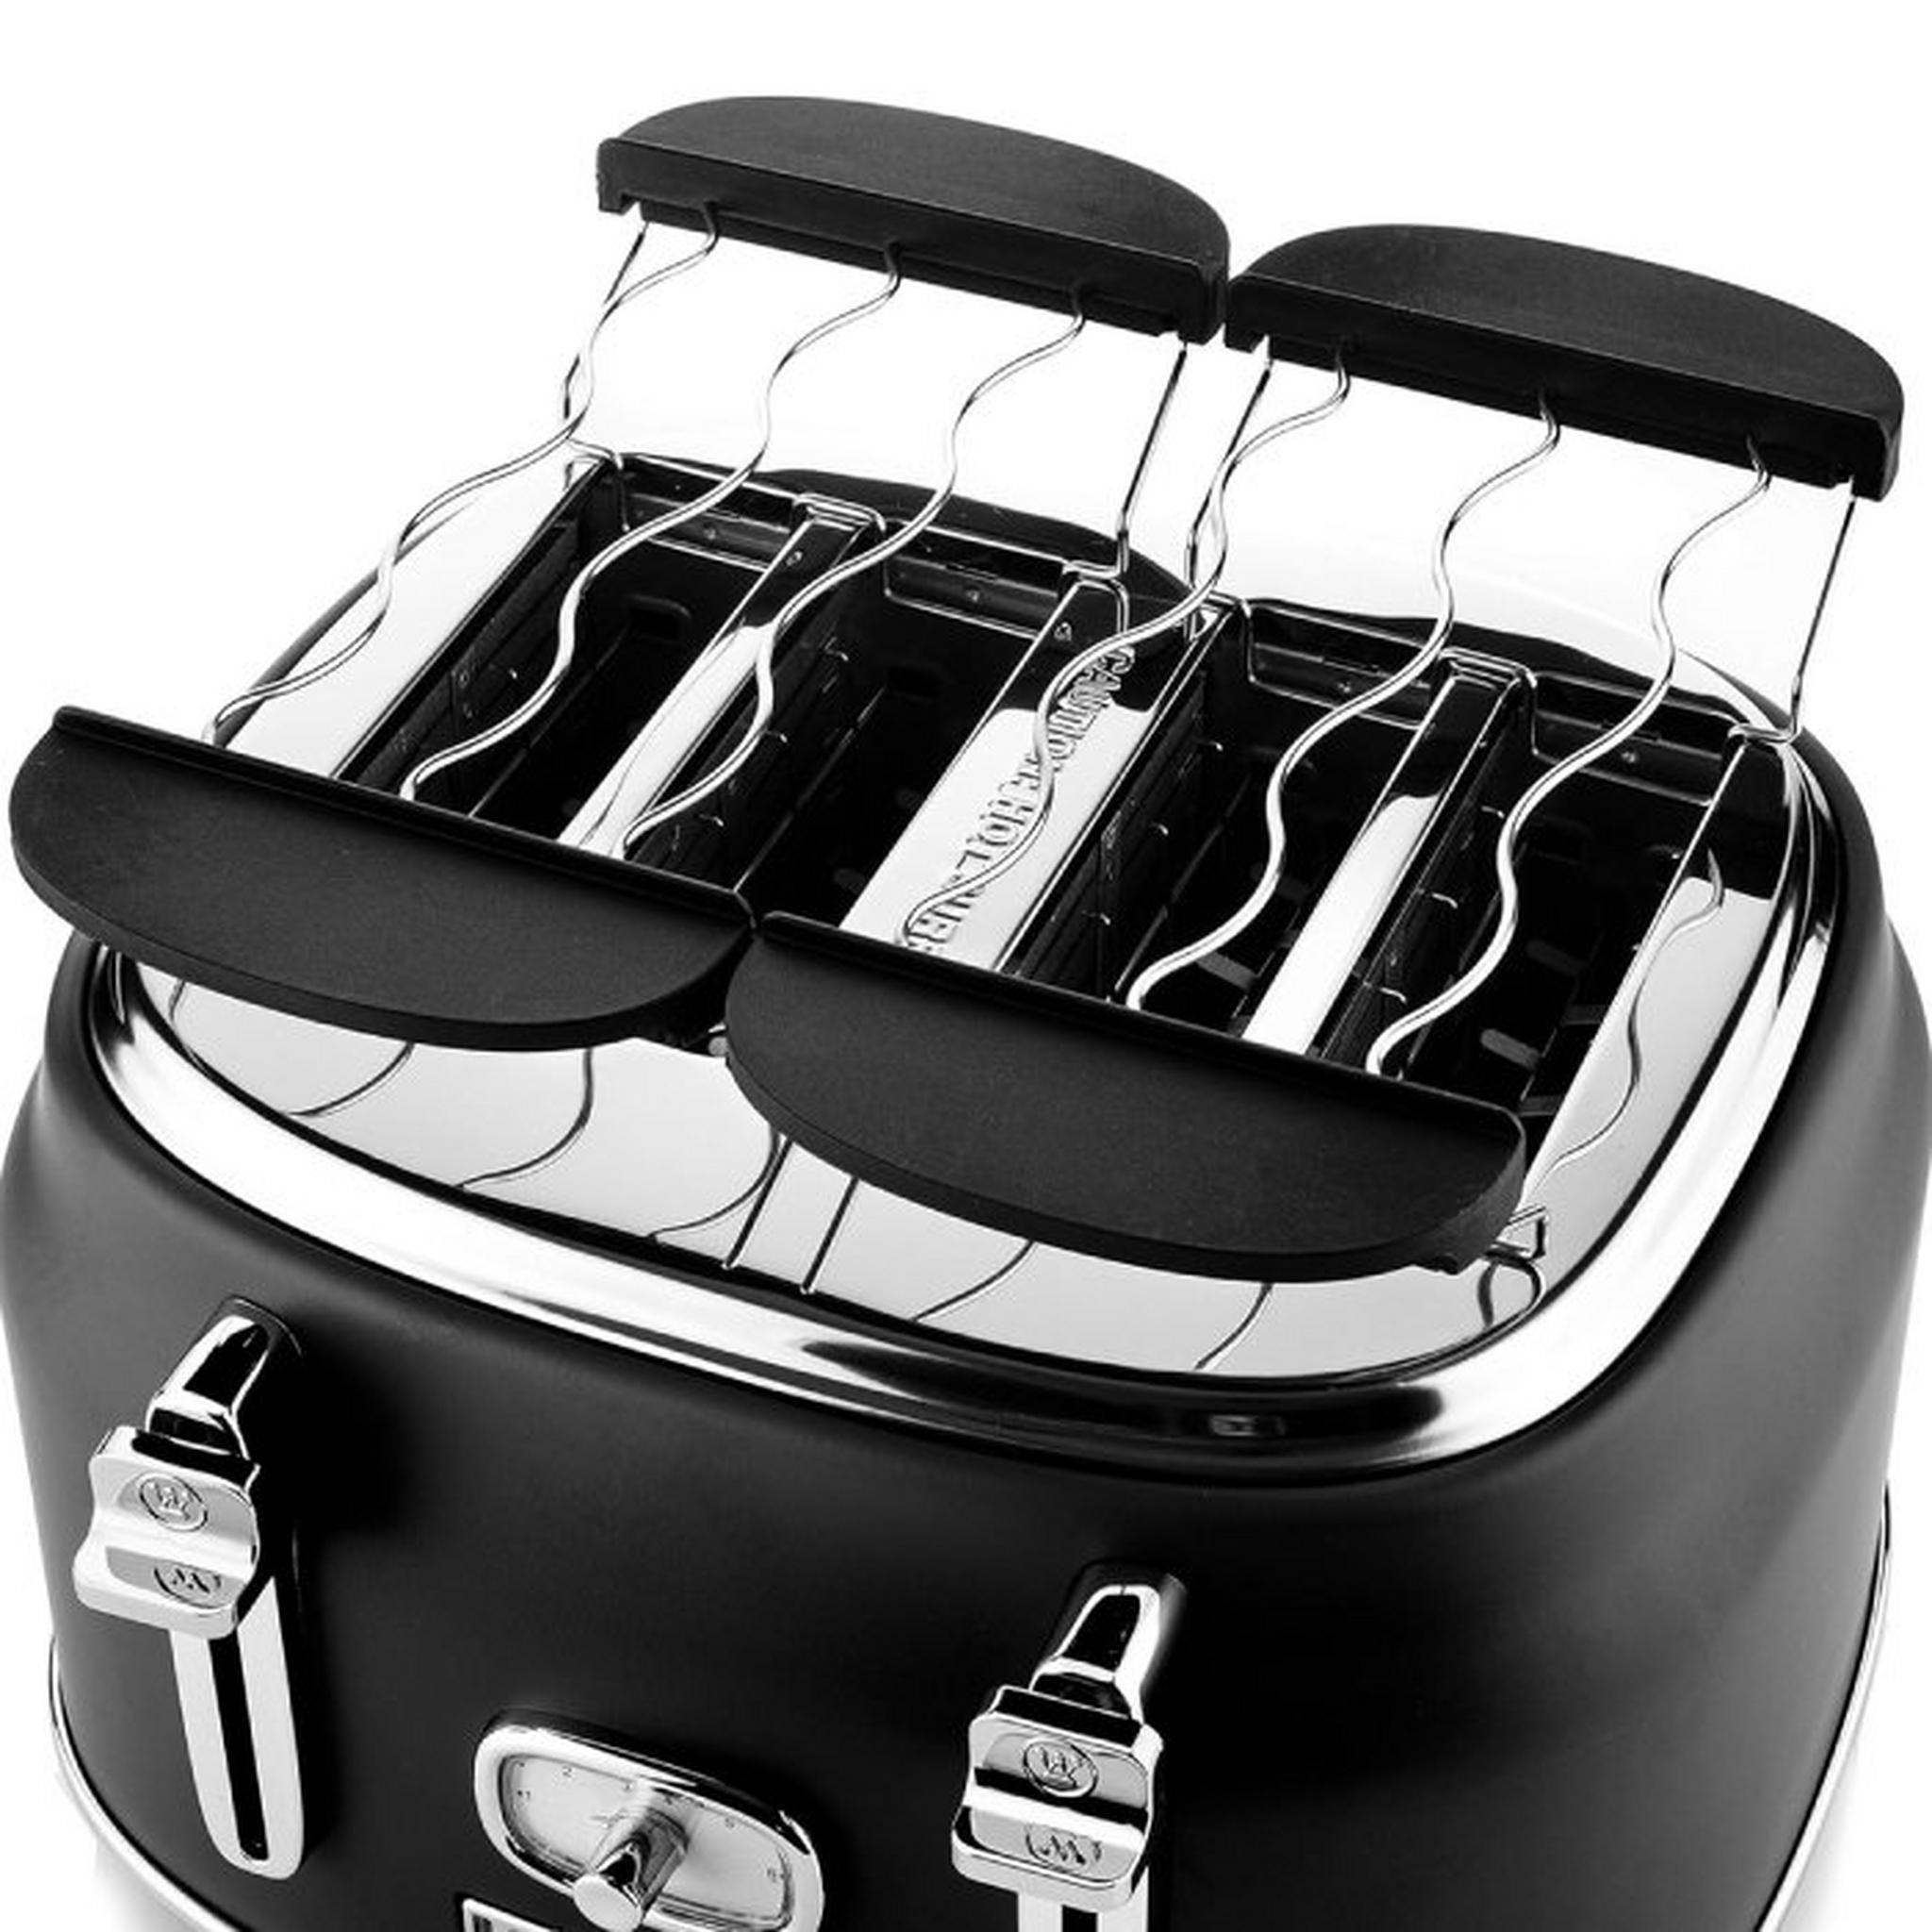 WestingHouse Retro Toaster, 1750W, 4 slices, WKTTB809UBK – Black